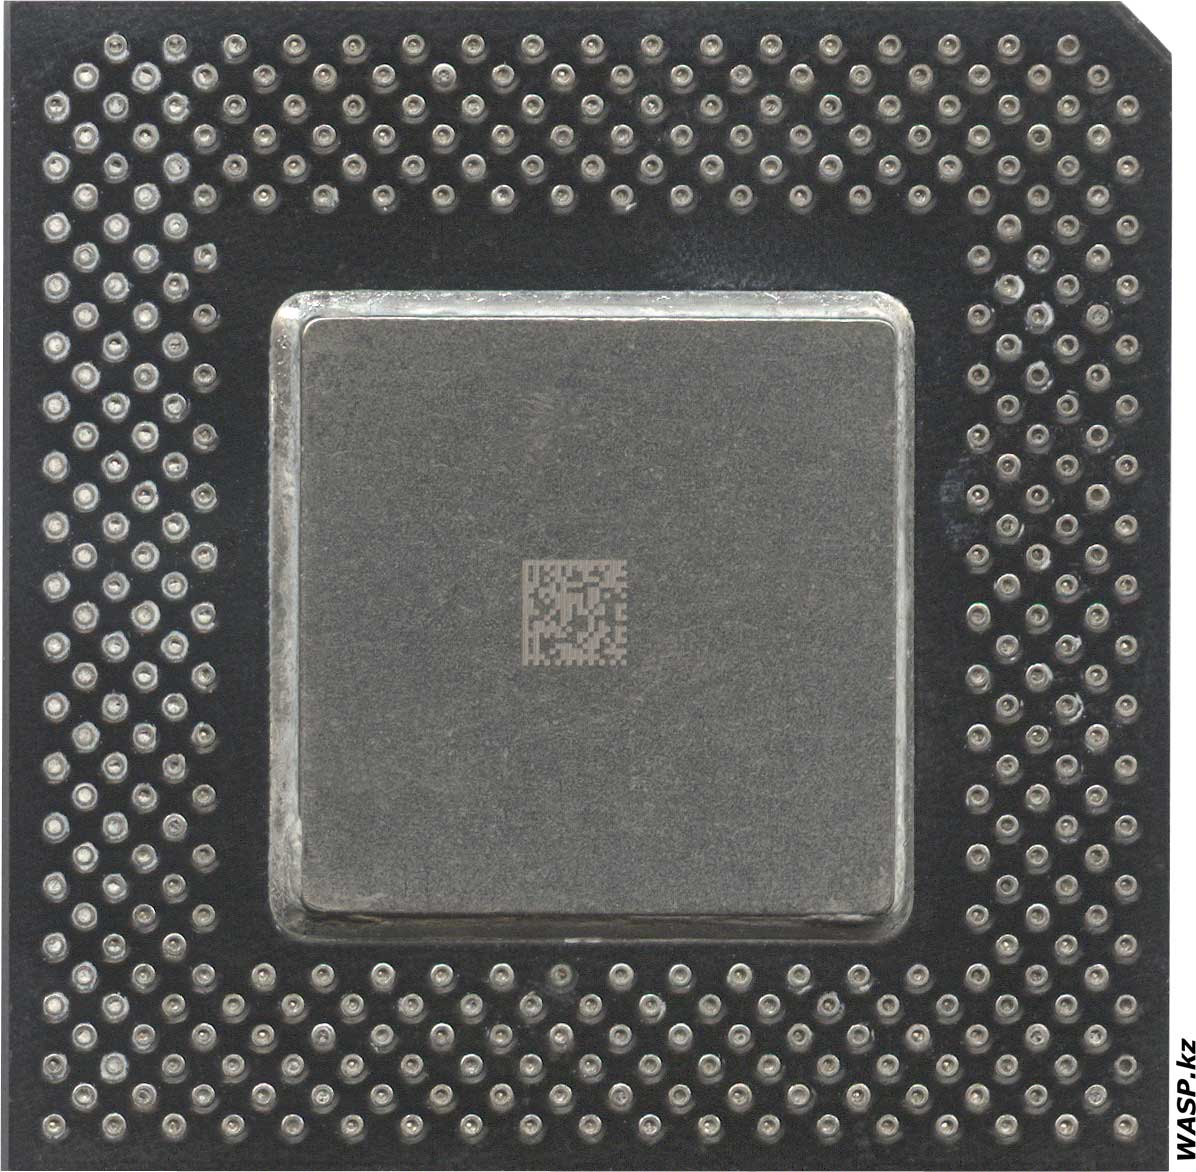 Intel Celeron 466 МГц Mendocino обзор старого процессора